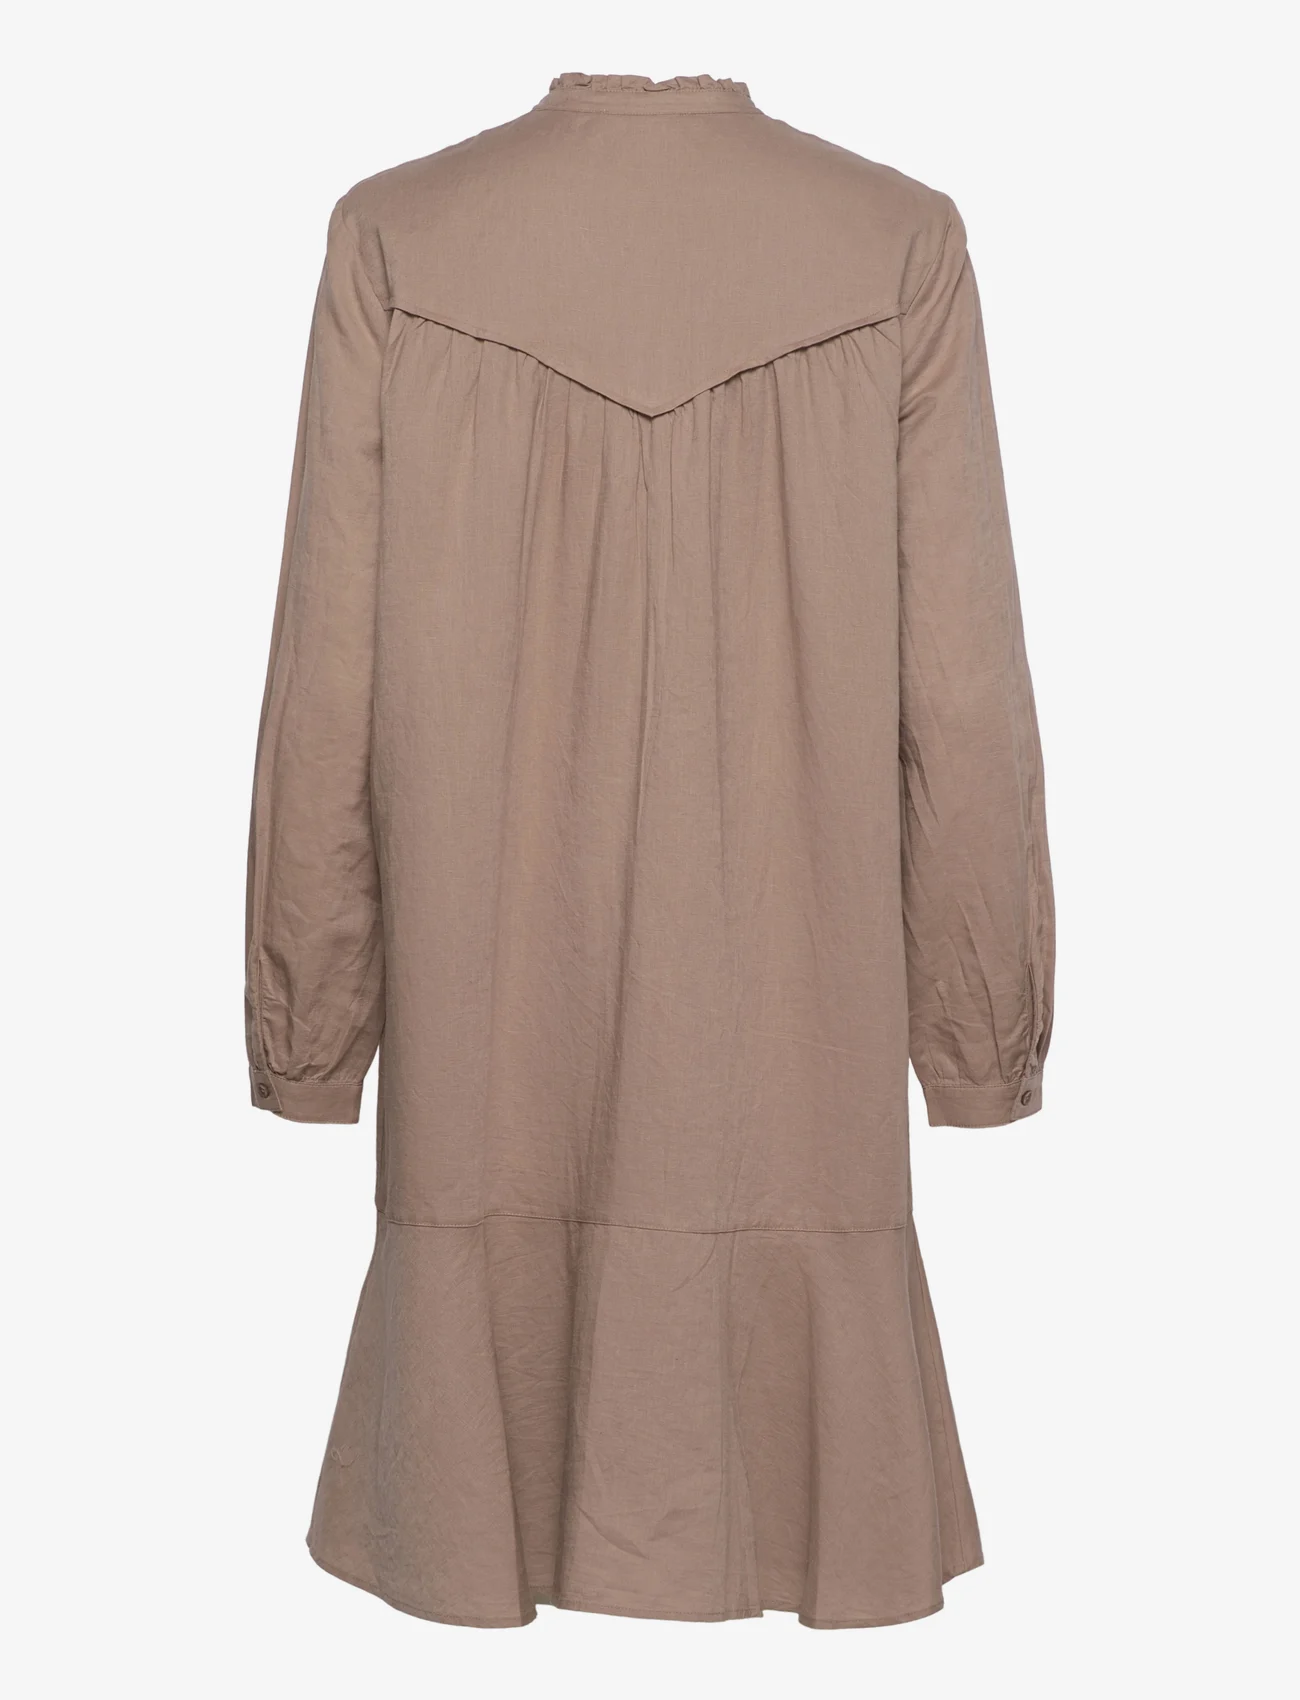 Esprit Casual - Dress in blended linen - sukienki koszulowe - taupe - 1